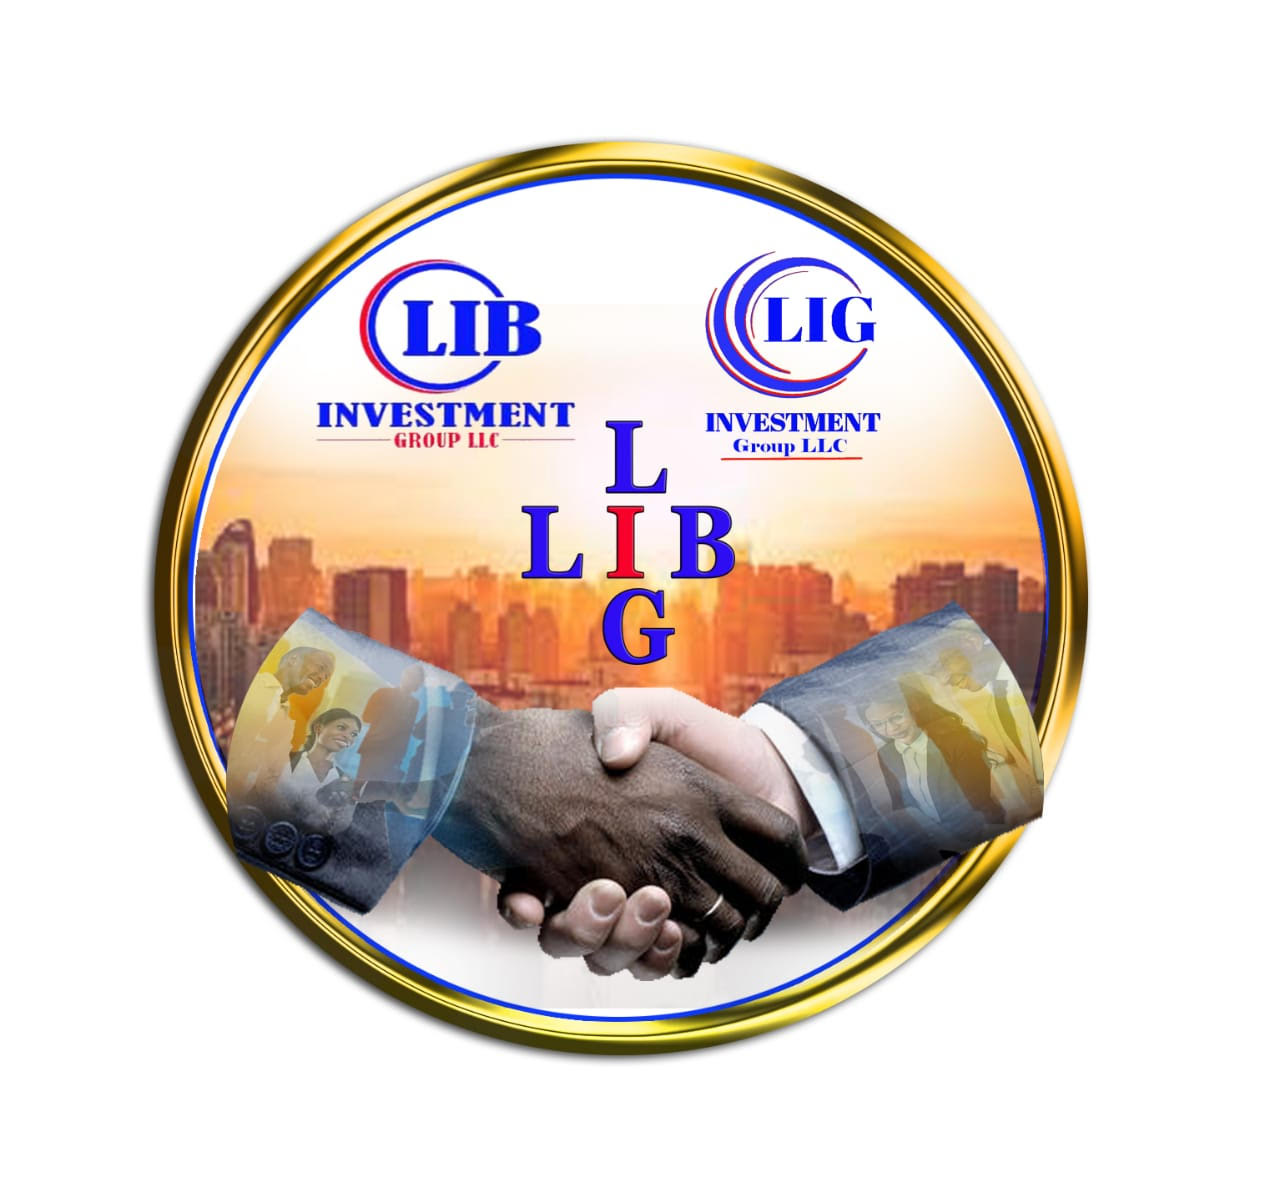 LIB Investment Group LLC's Image